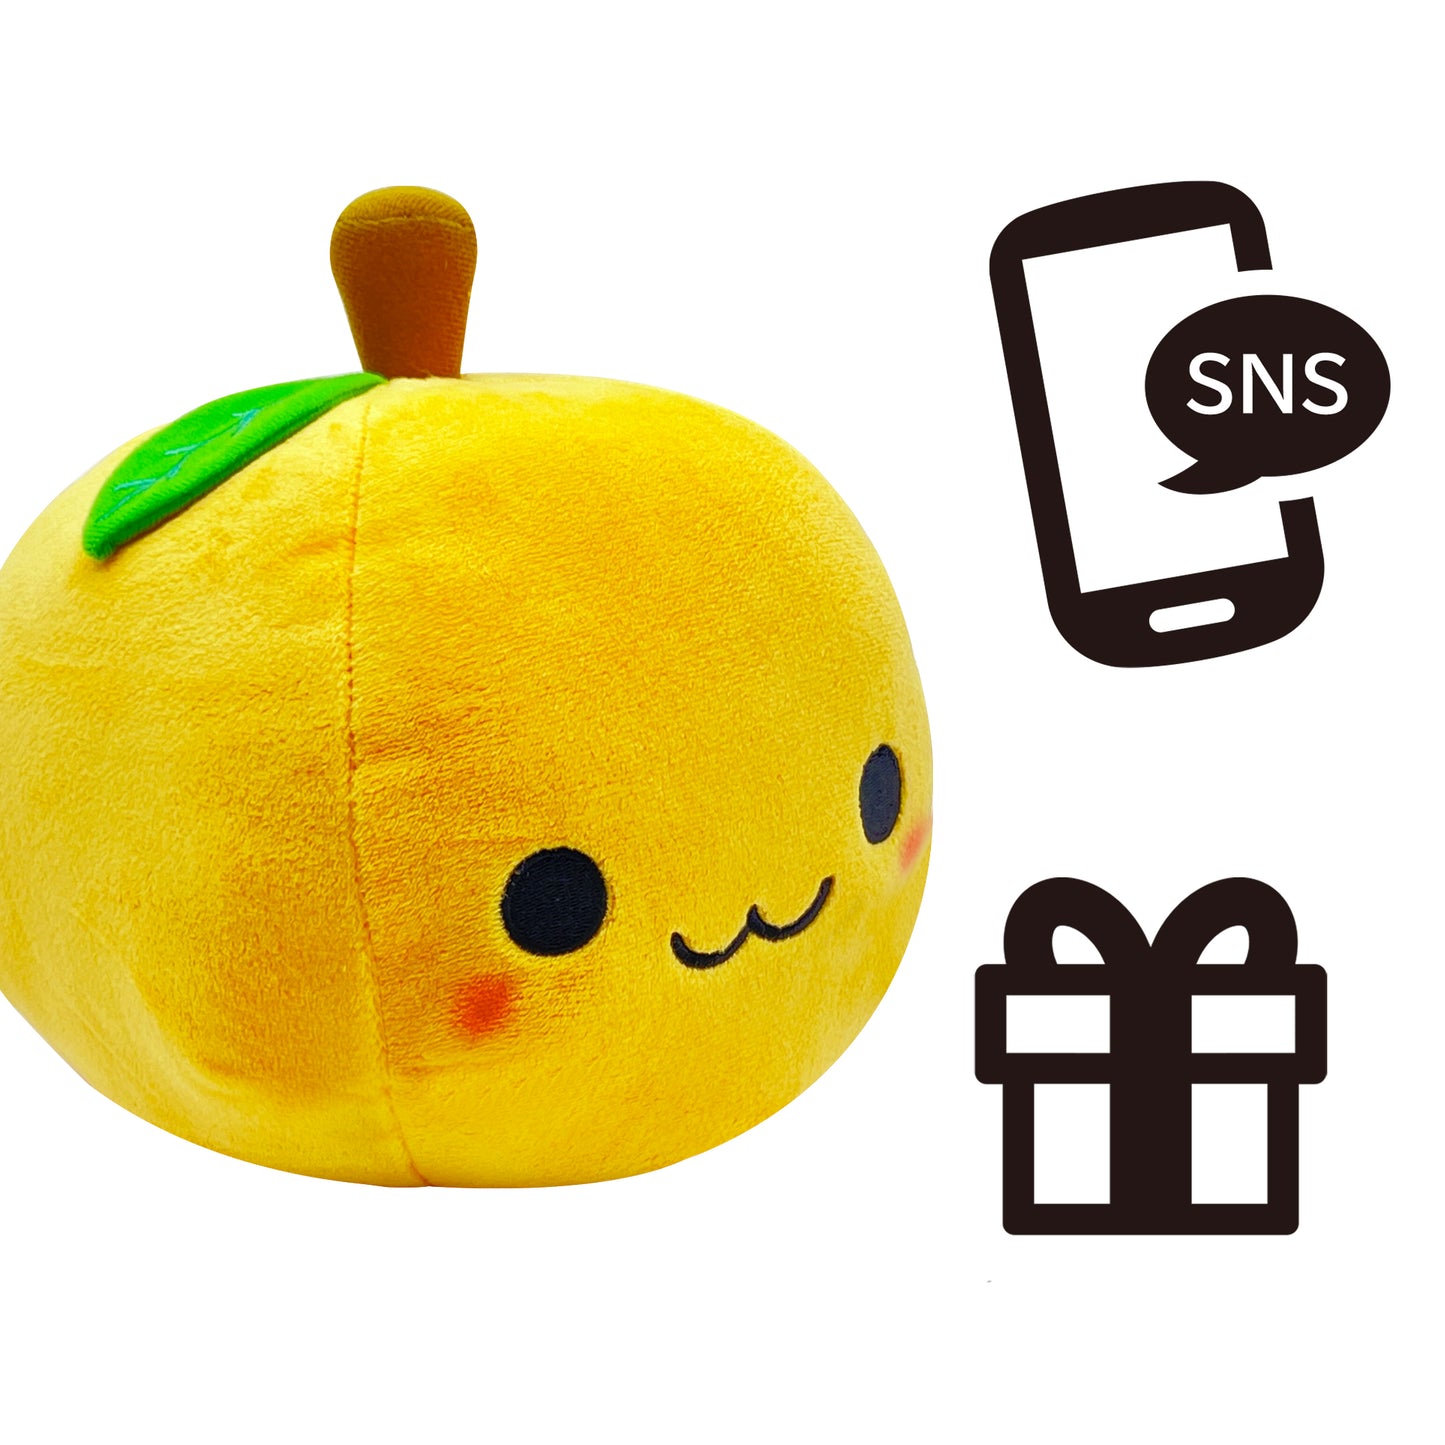 Pictogram of Orange Fruit Stuffed Toy Mikanchan Yellow